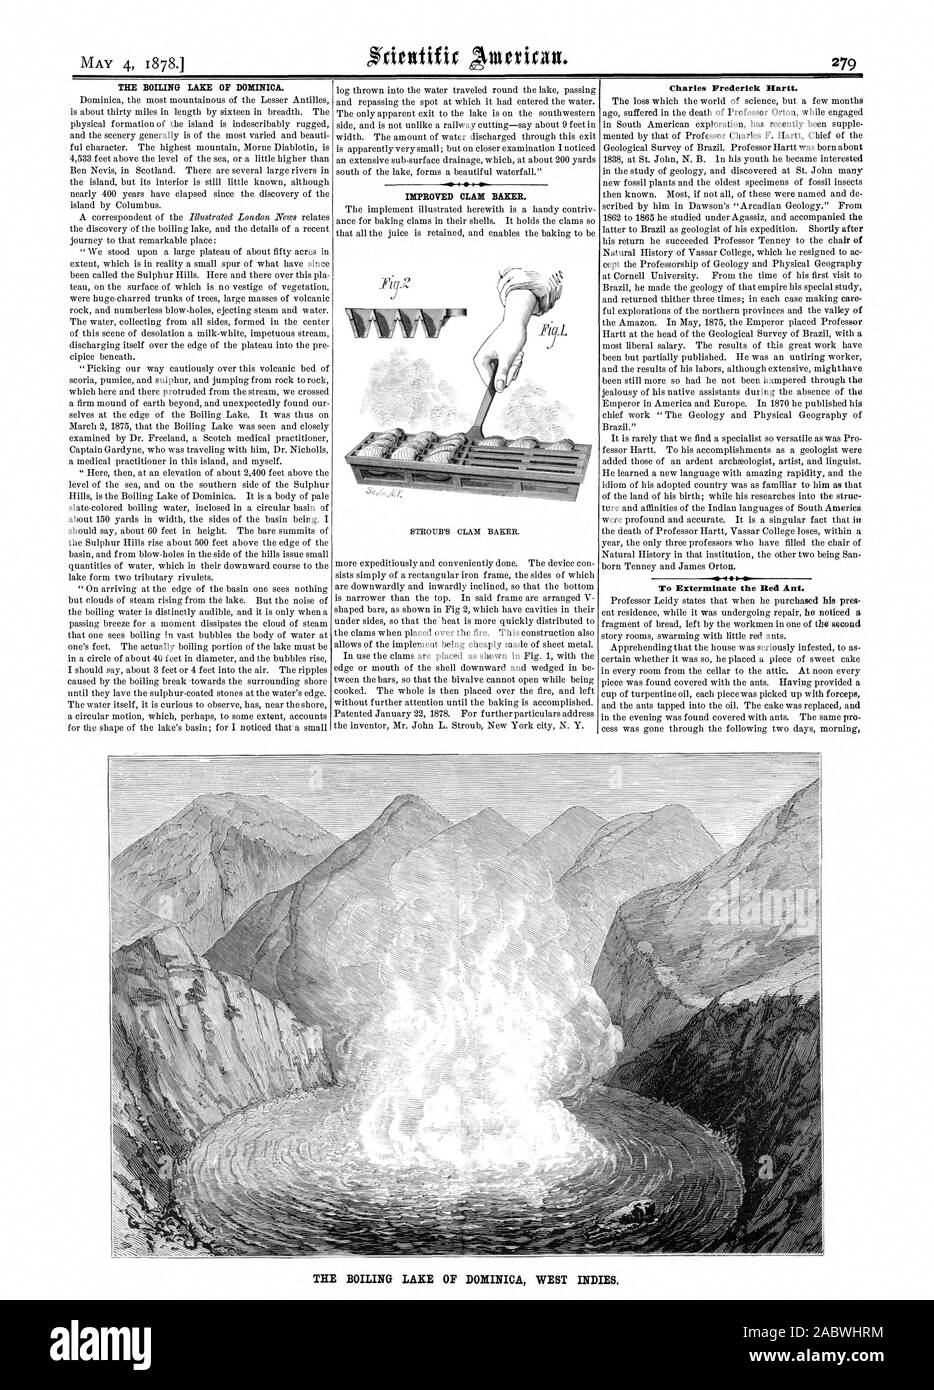 El Lago hirviente de Dominica. Mejora CLAM Baker. Charles Frederick Hartt. Exterminar a la hormiga roja. El Lago hirviente de Dominica West Indies., Scientific American, 1878-05-04 Foto de stock